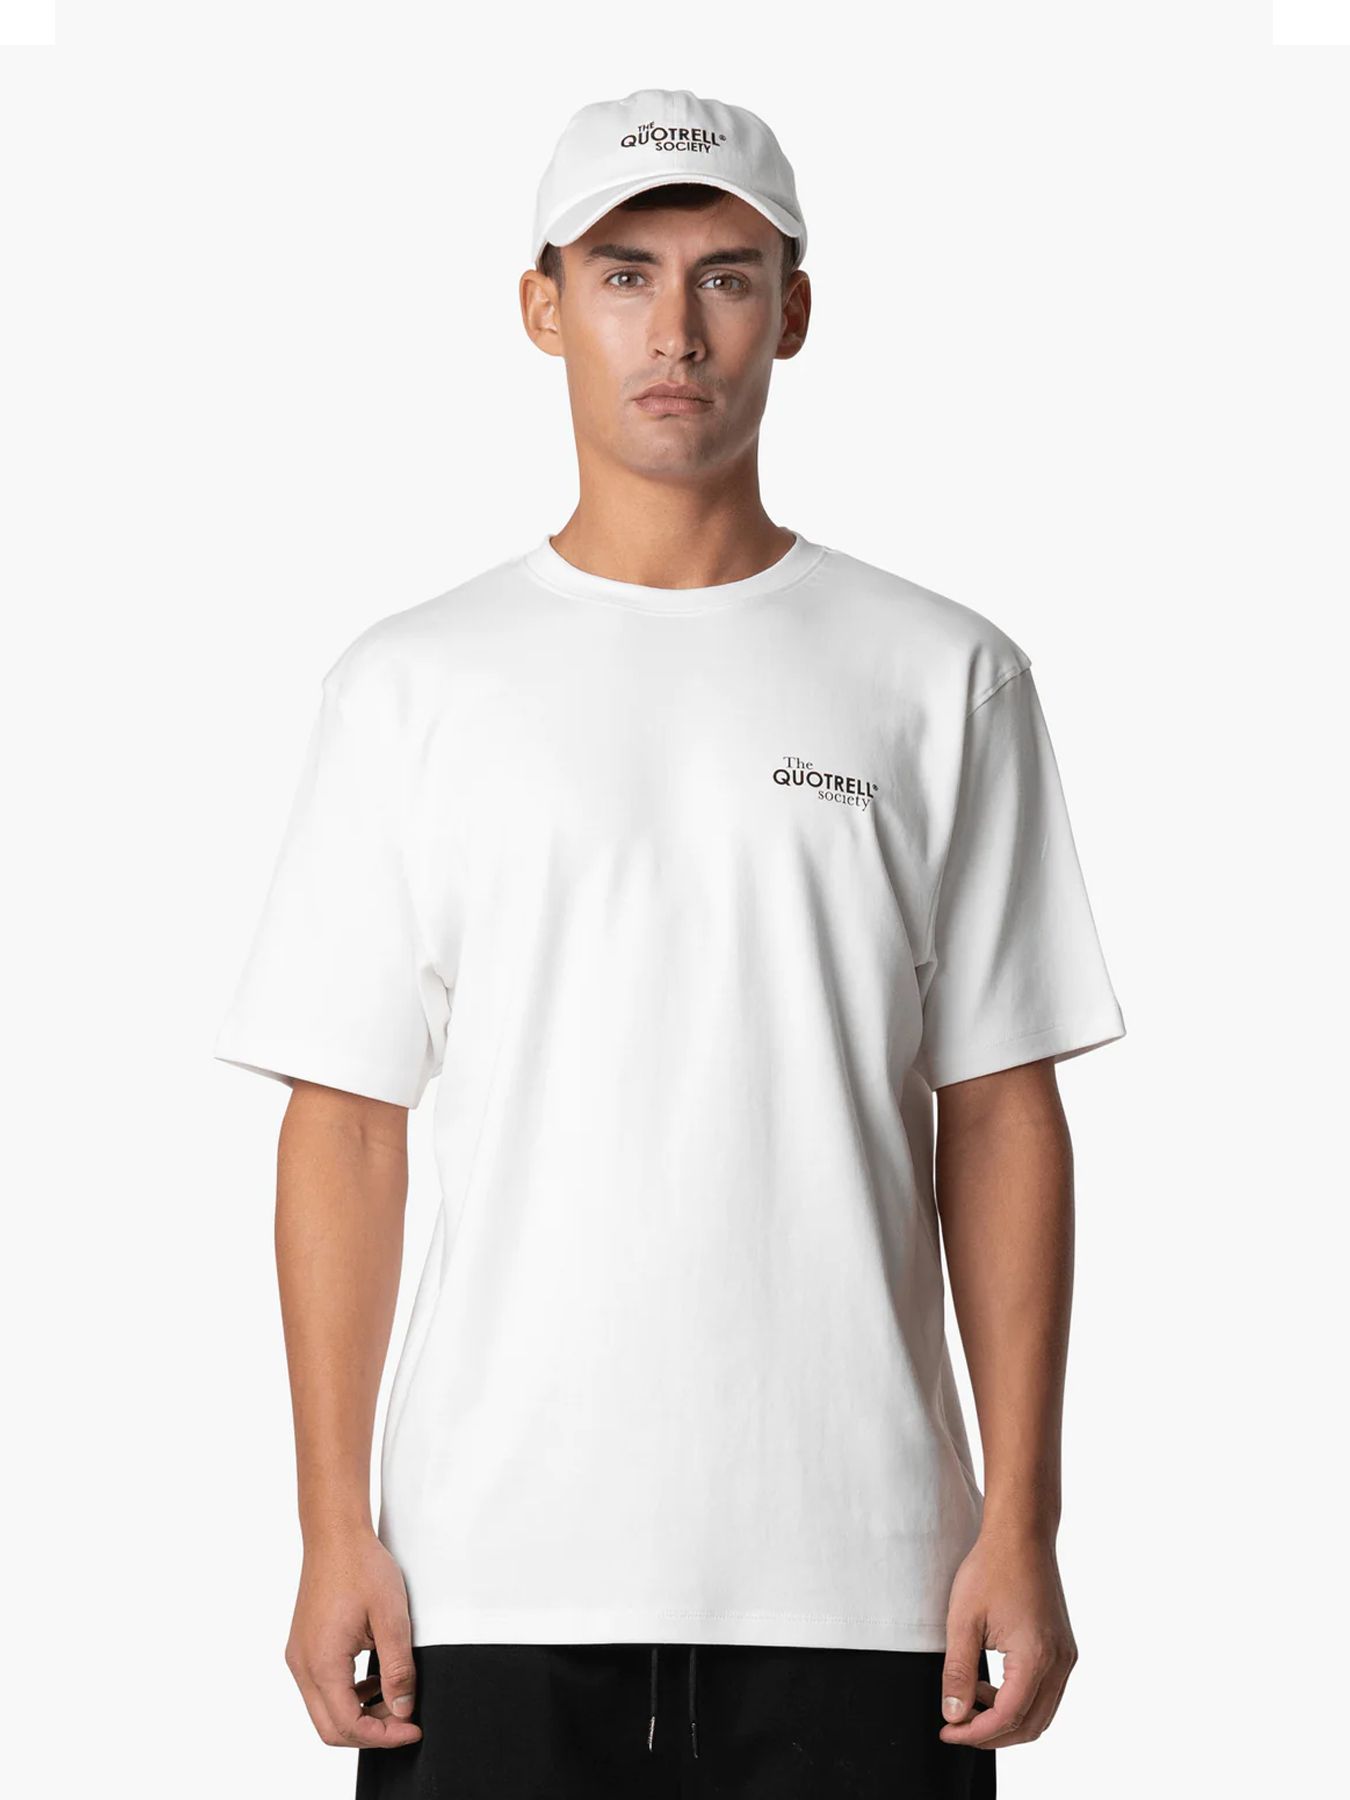 Quotrell Society t-shirt White/black 00108490-102